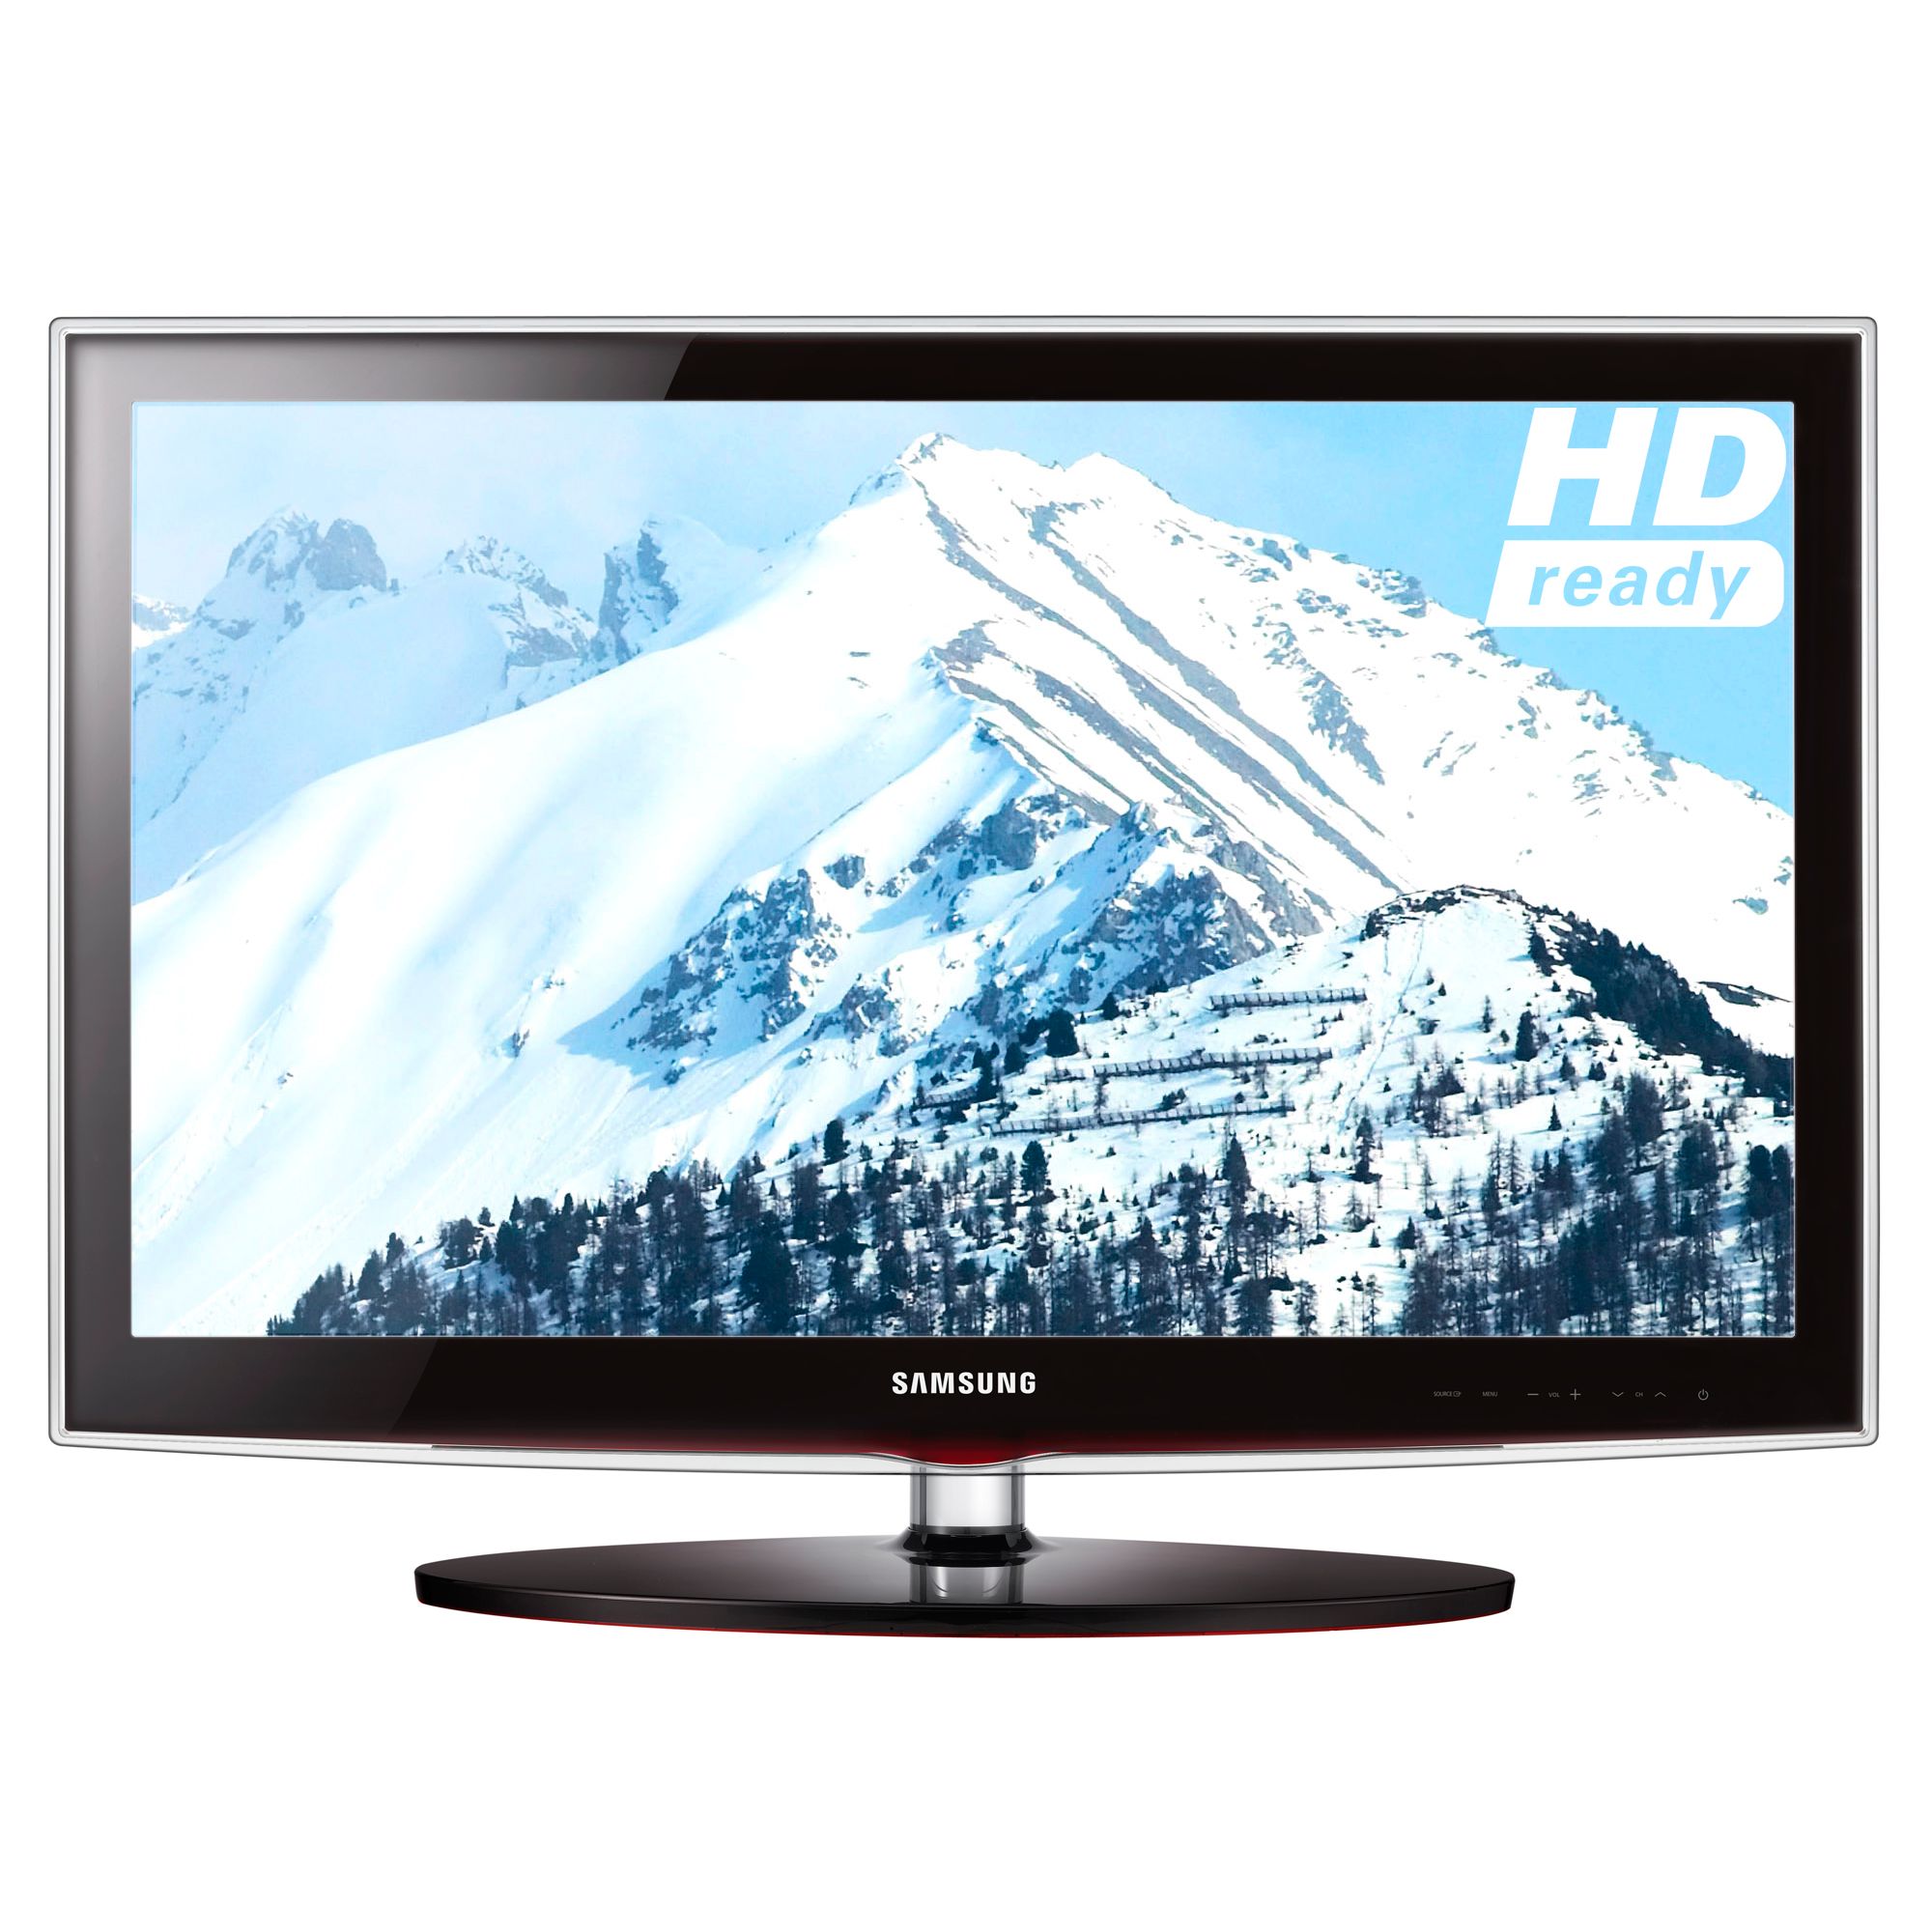 Samsung UE32C4000P LED HD Ready Digital Television, 32 Inch at John Lewis